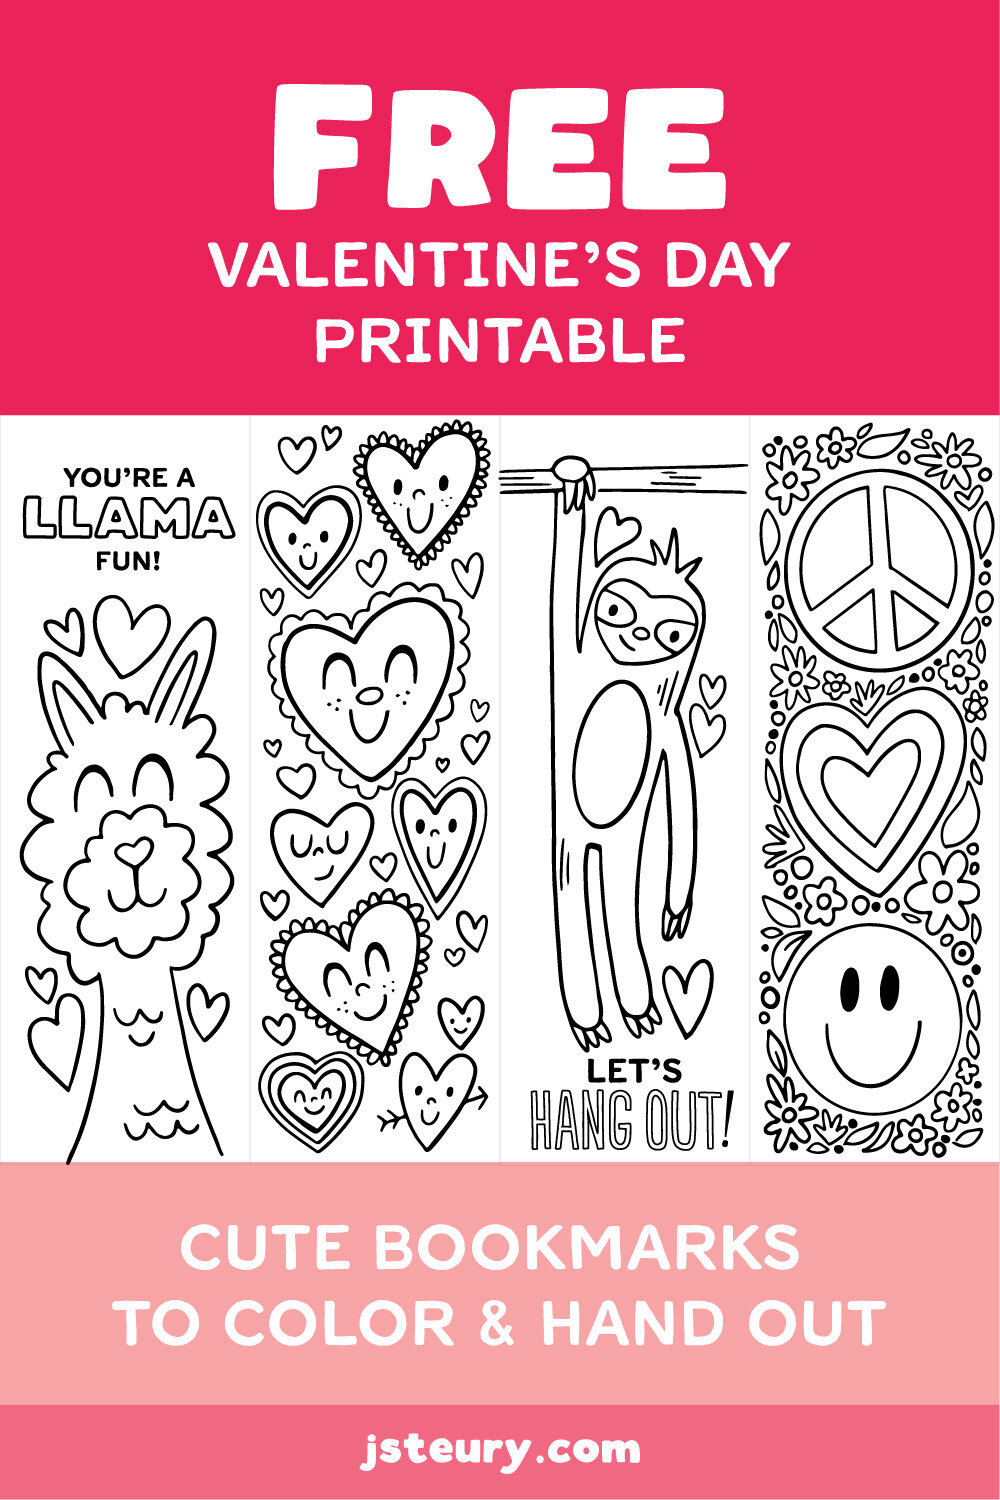 free-printable-bookmarks-valentine-s-day